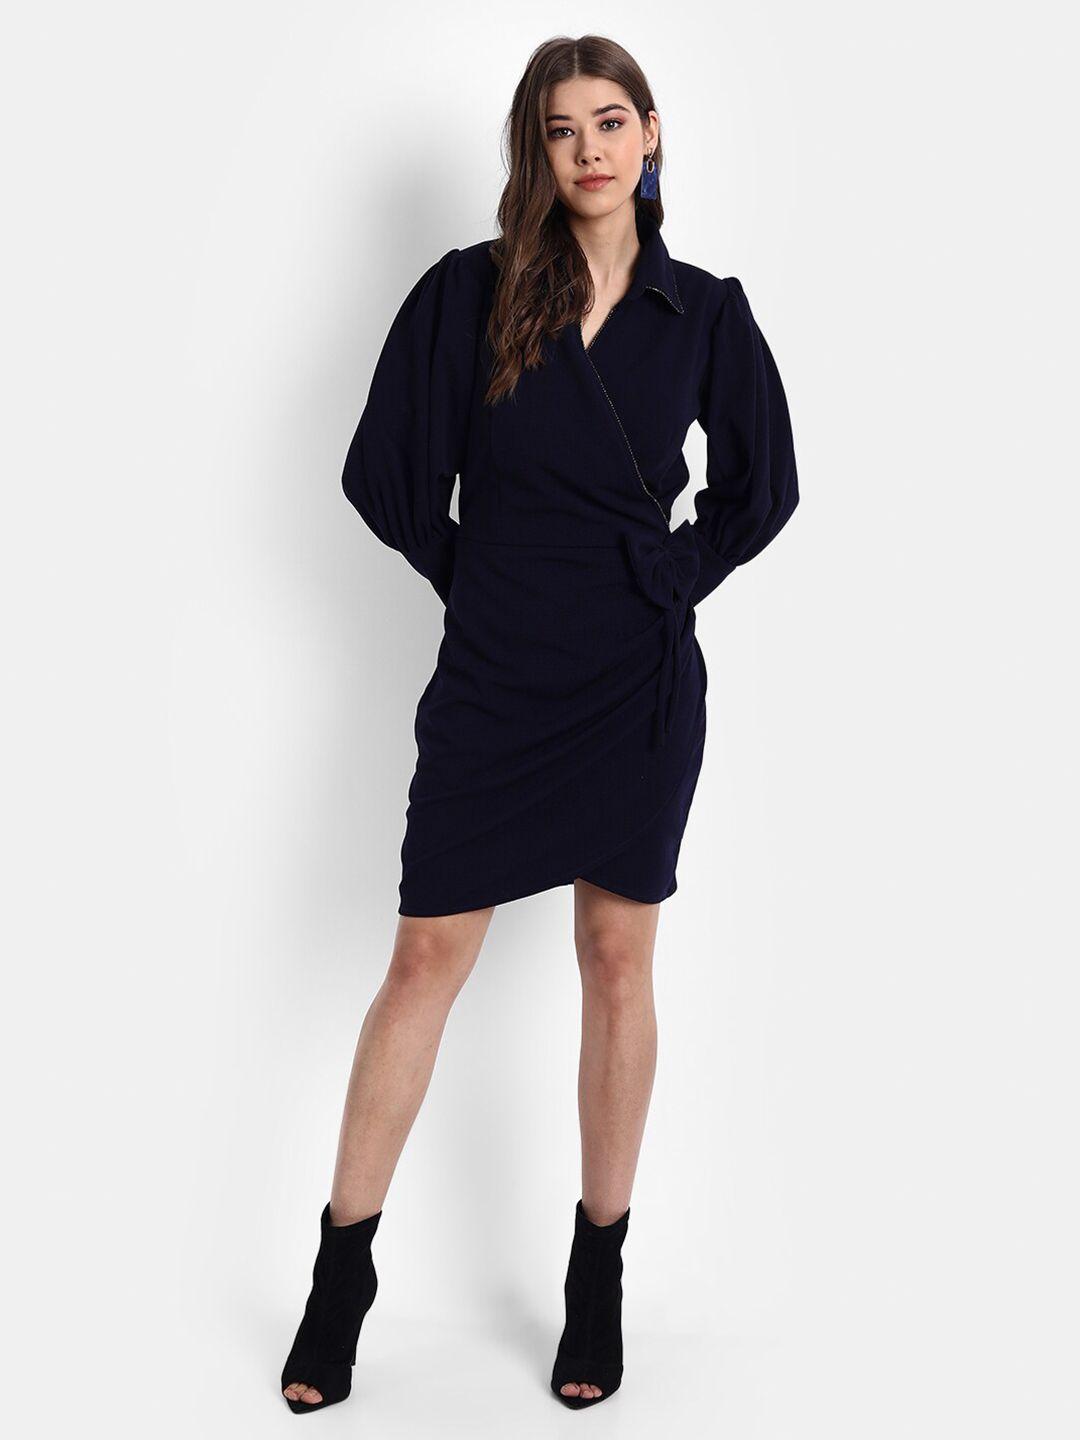 broadstar navy blue sheath dress